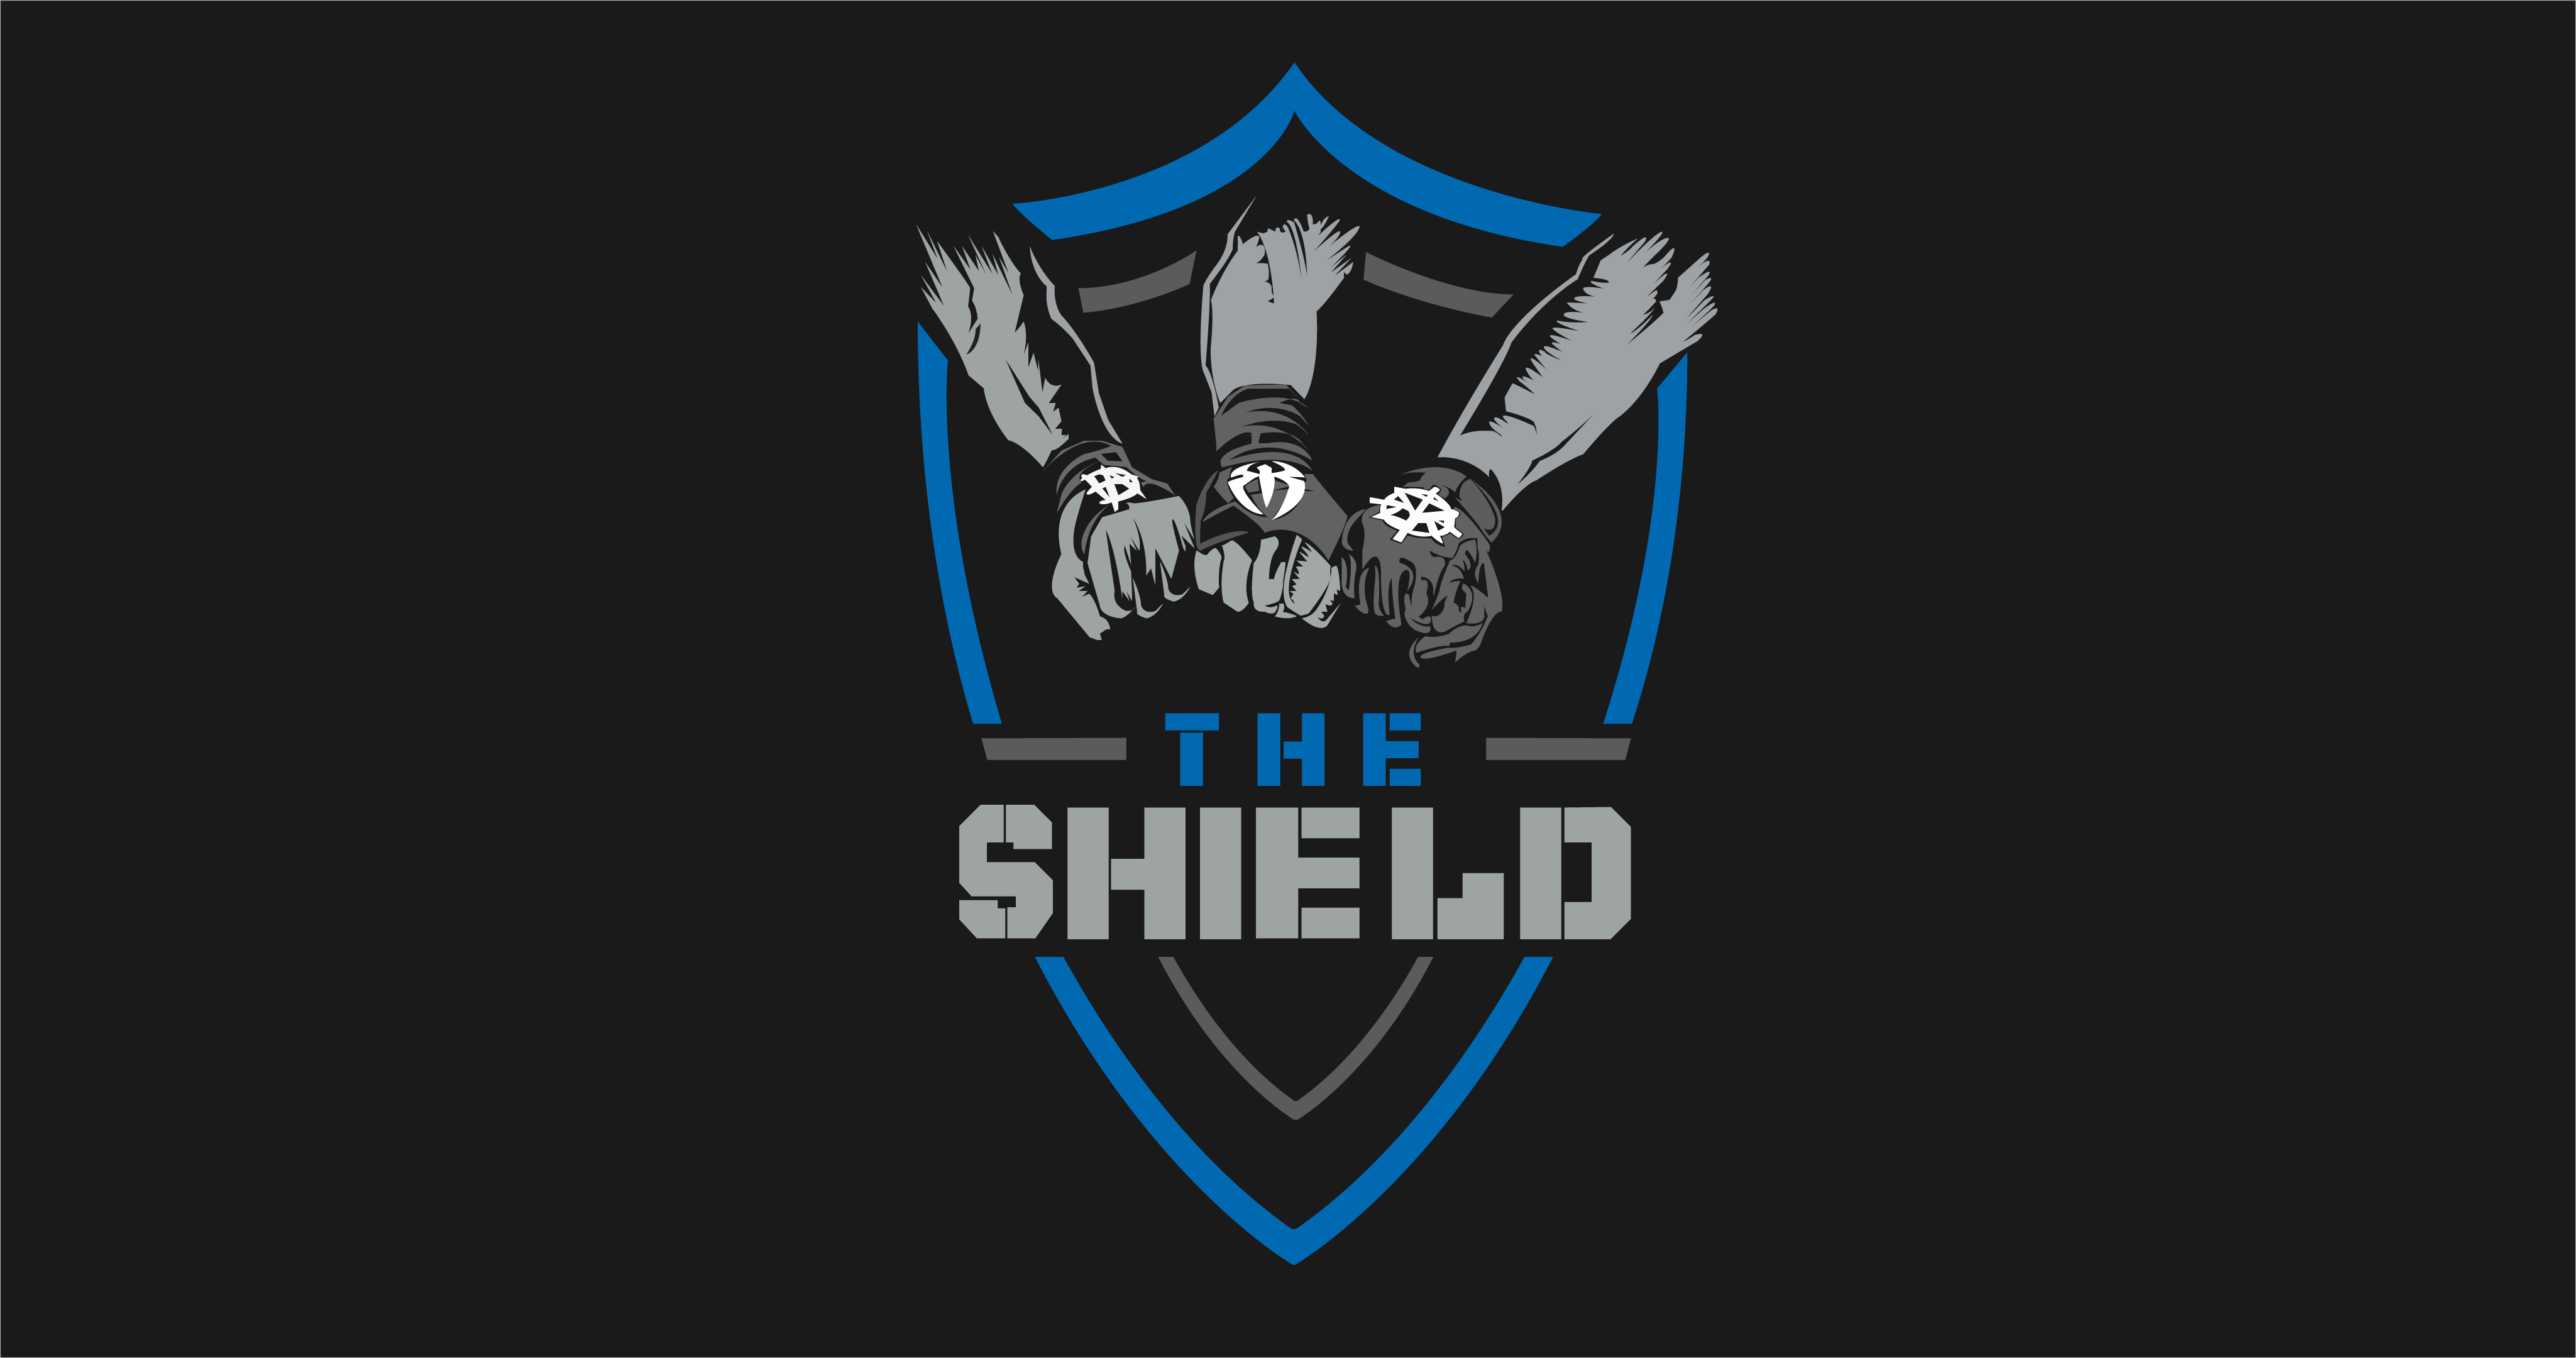 I tried recreating a 4K Shield wallpaper w/ the new logo